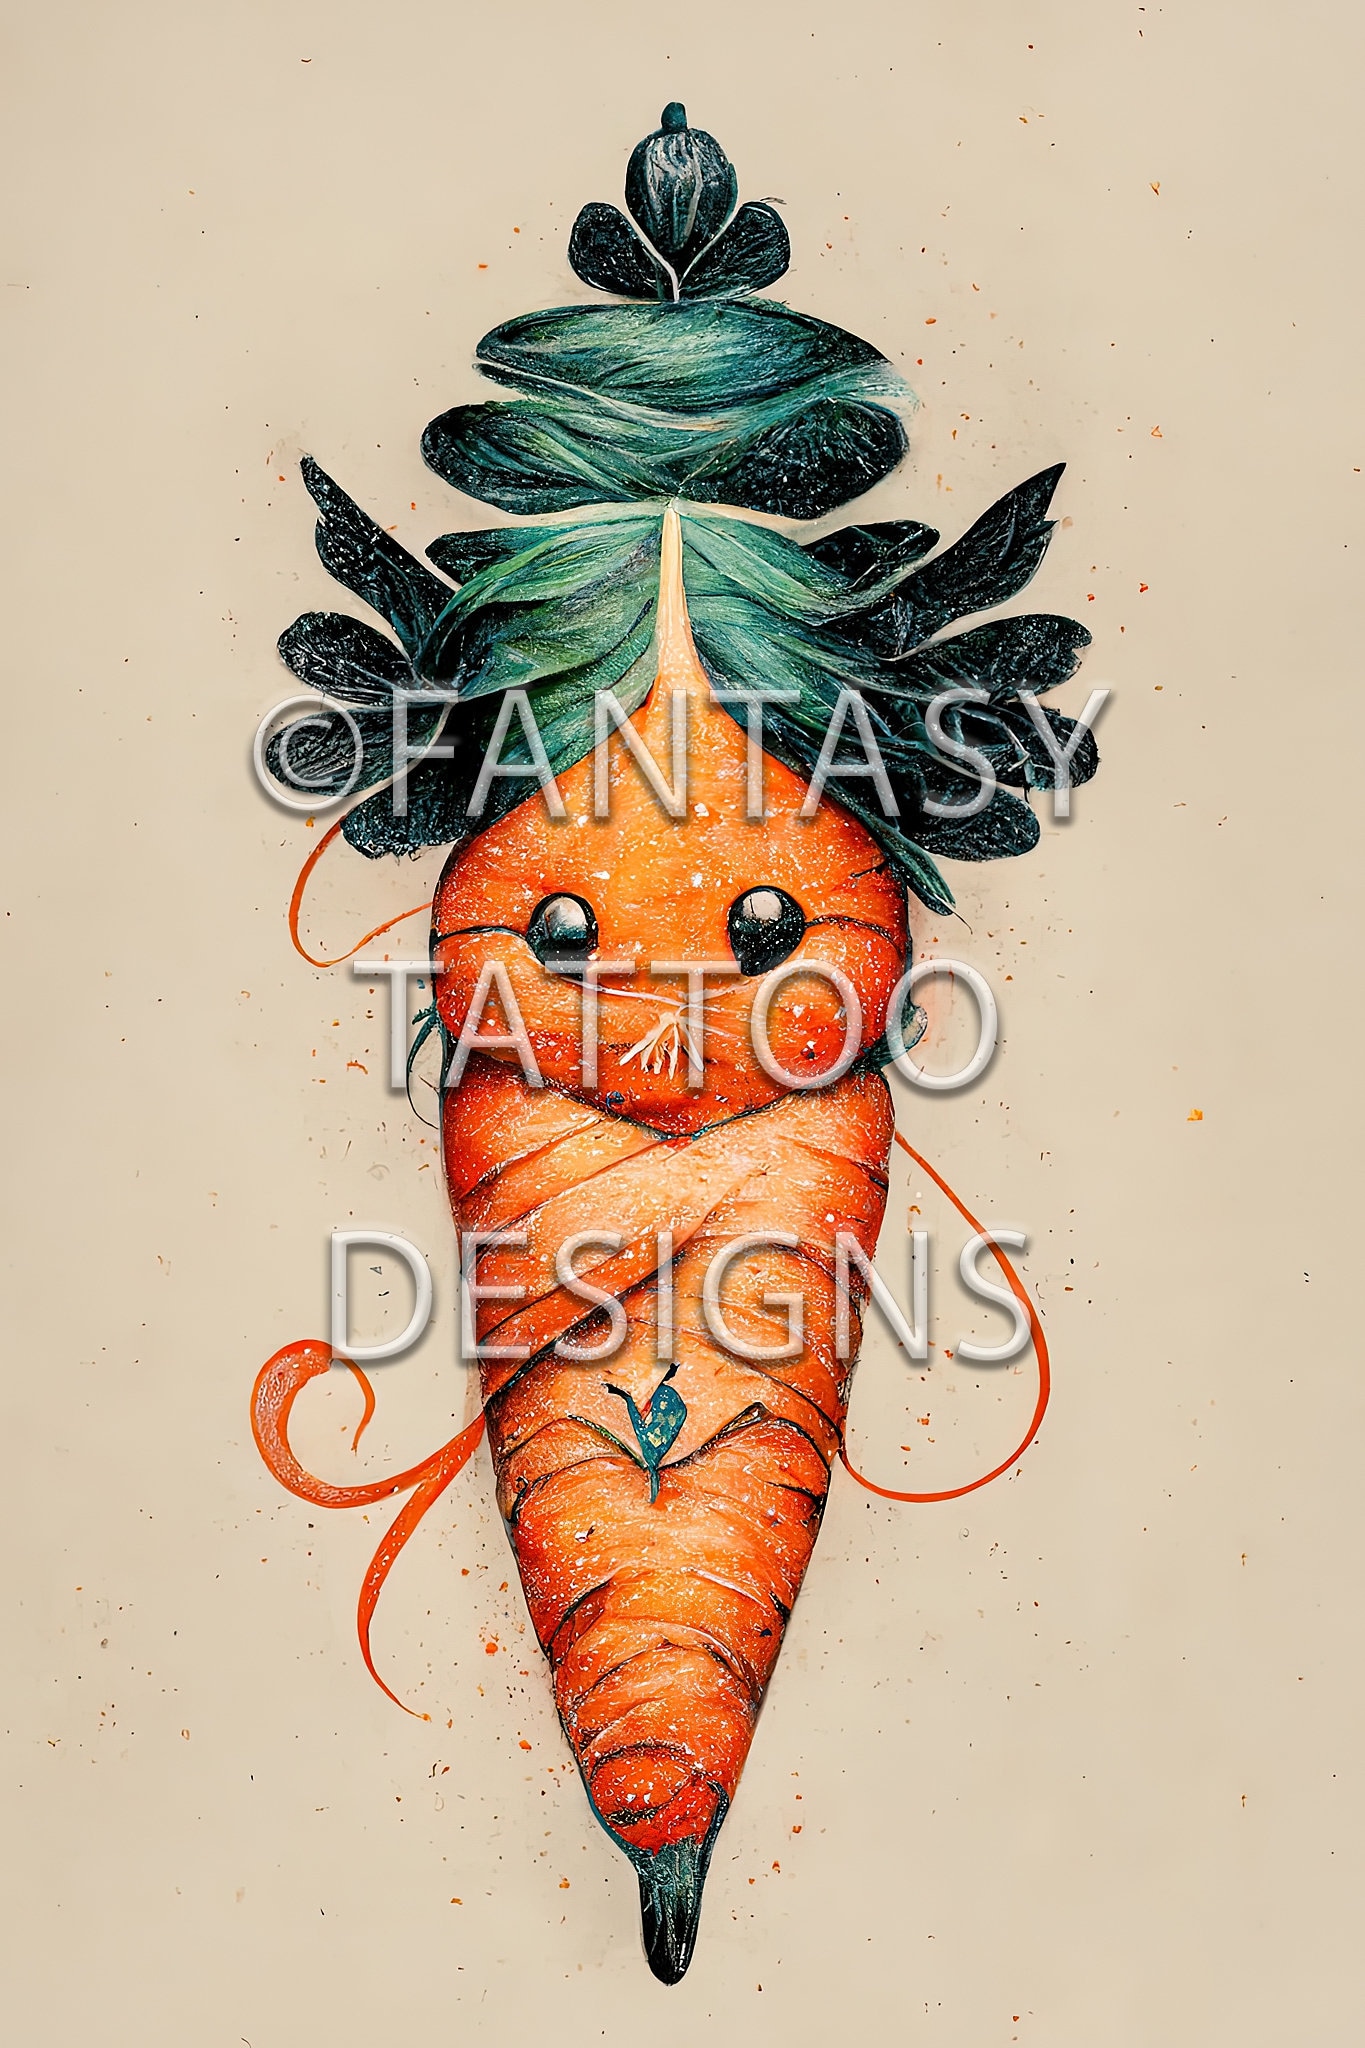 Black workers carrot Artist  Adrienne haberl IG  adriennehaberl  Small  tattoo designs Dream tattoos Inspirational tattoos